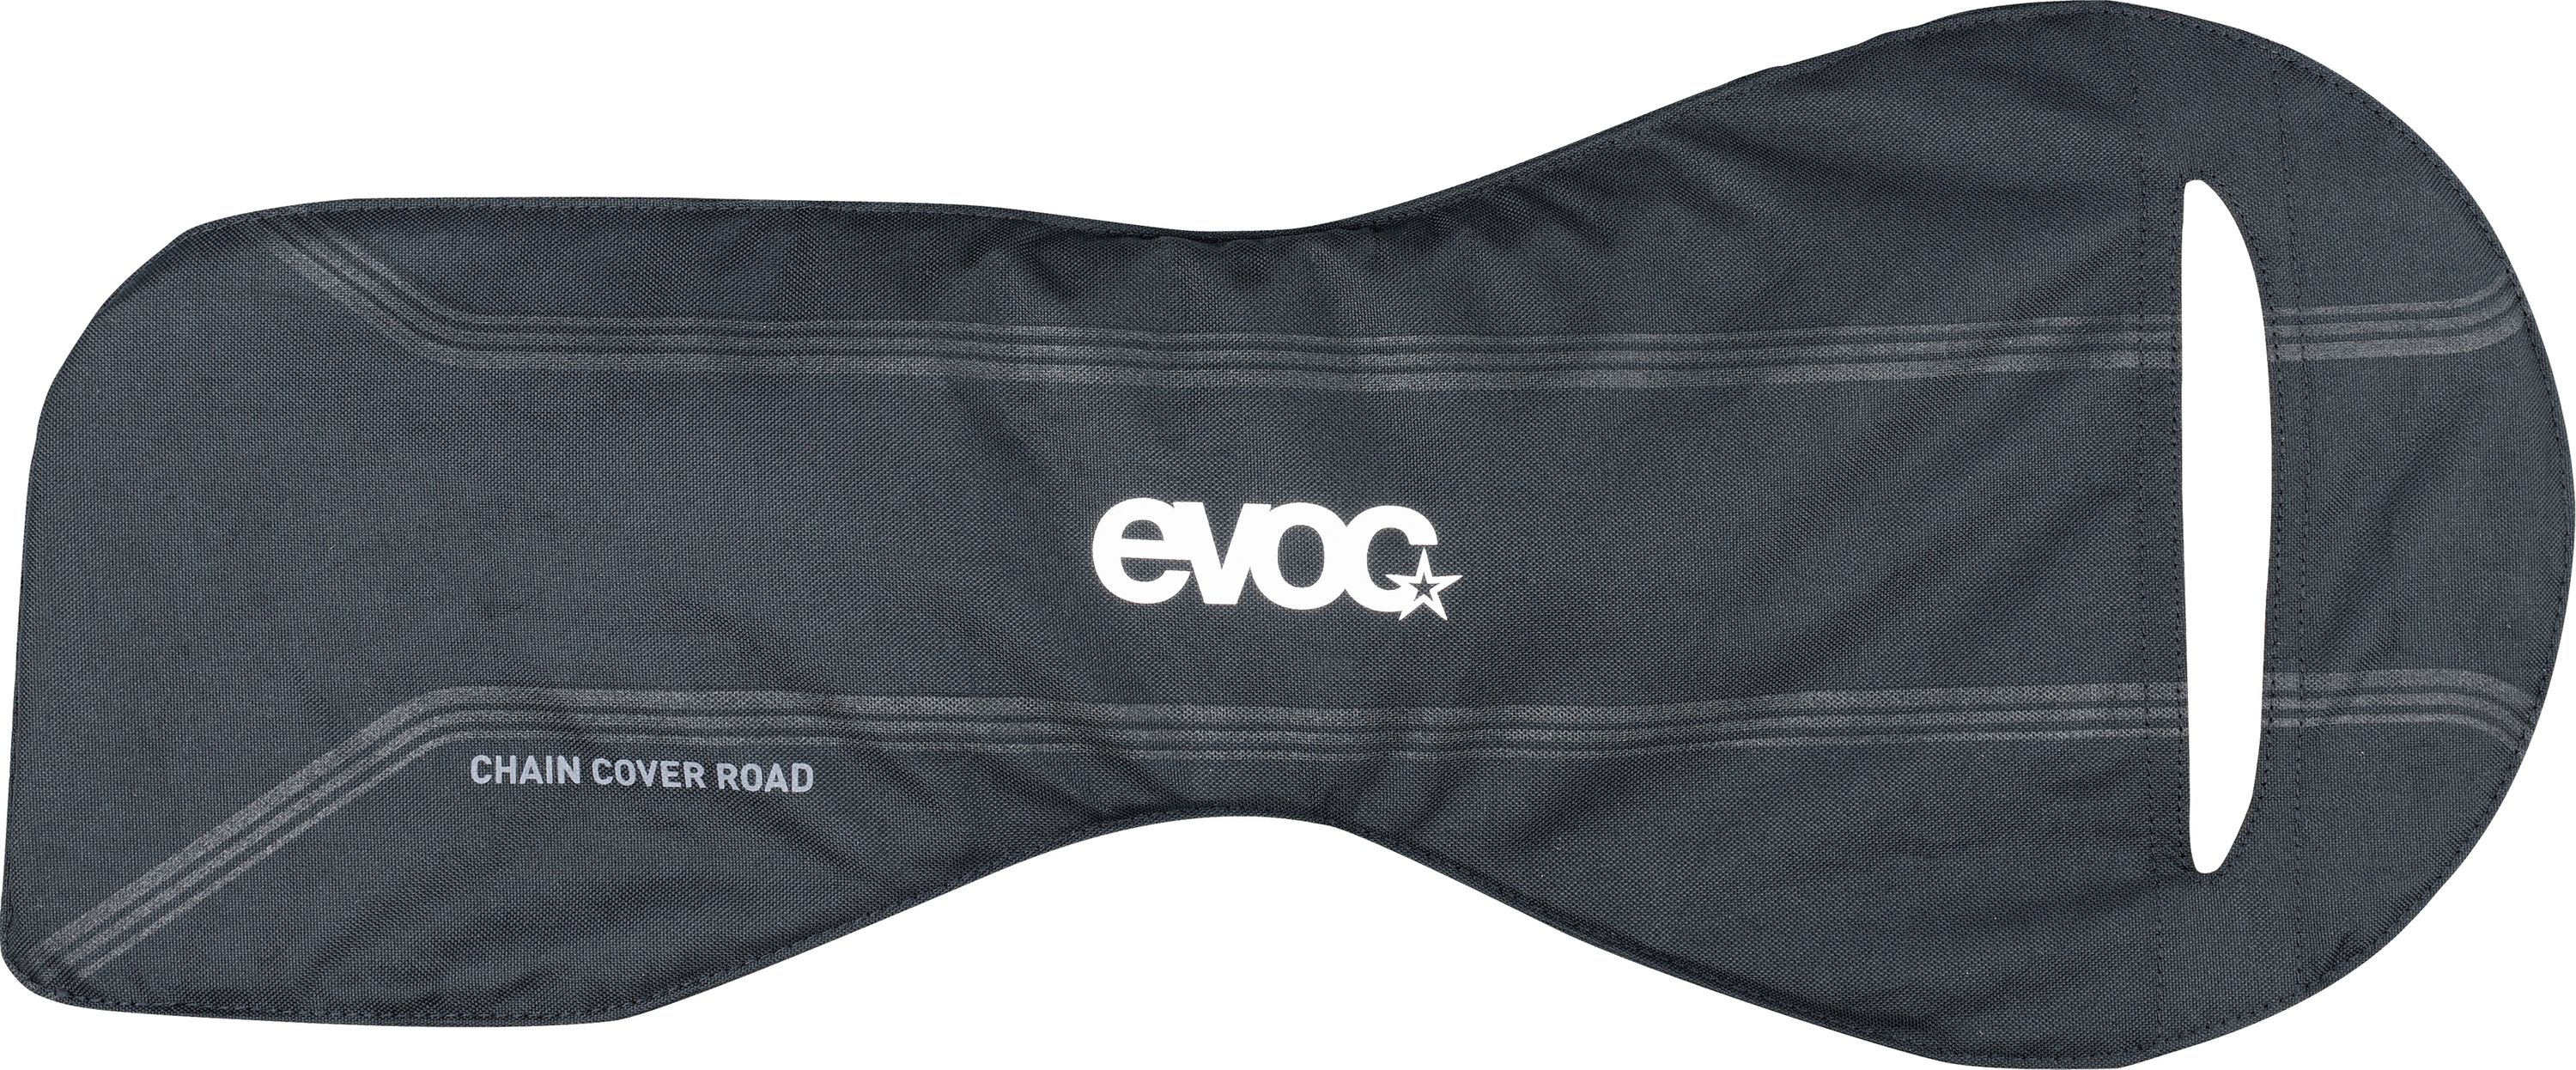 evoc Chain Cover Road - Fahrradketten-Abdeckung